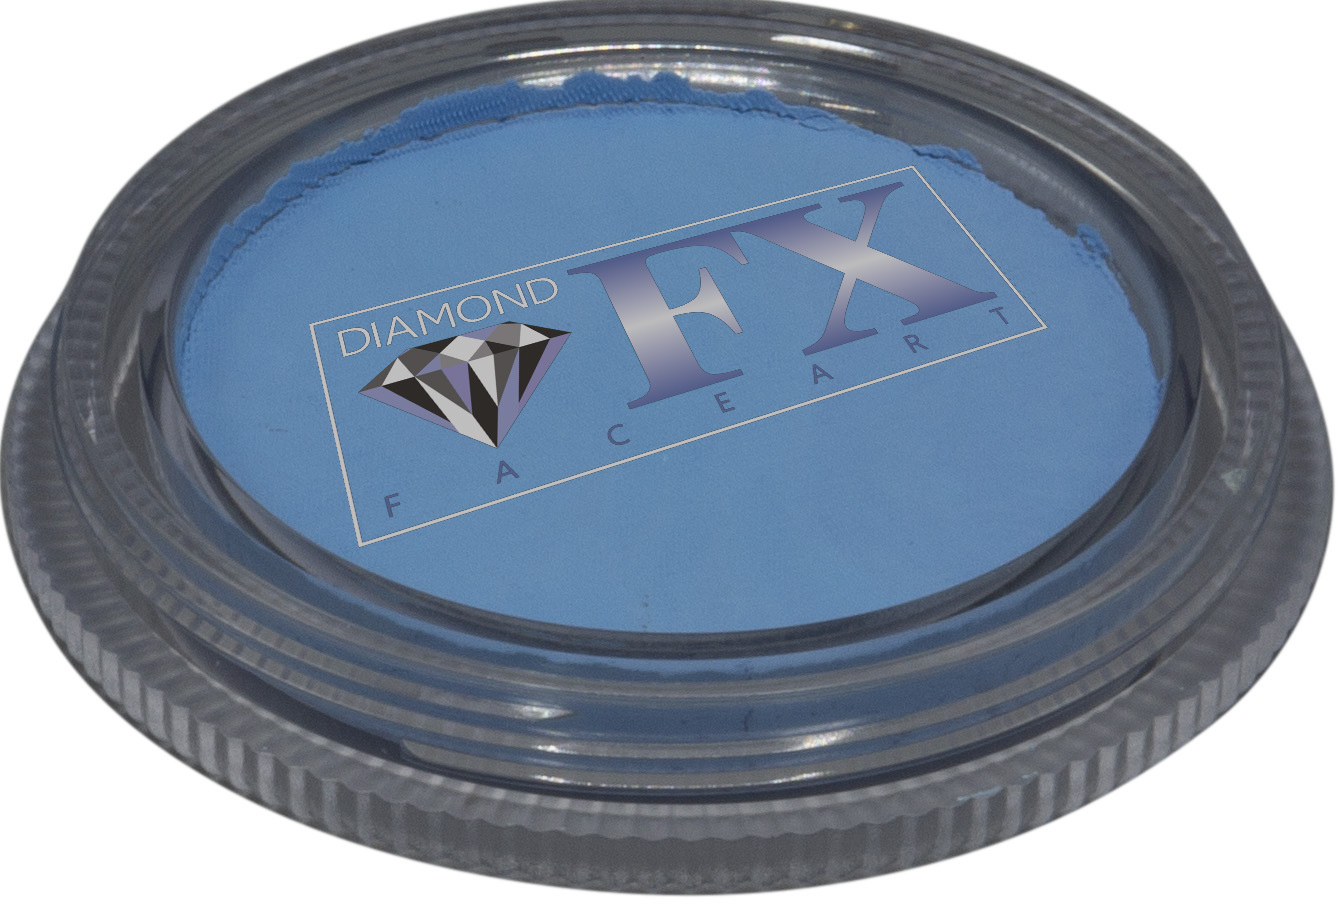 Diamond FX Pastel Blue 30g - Small Image